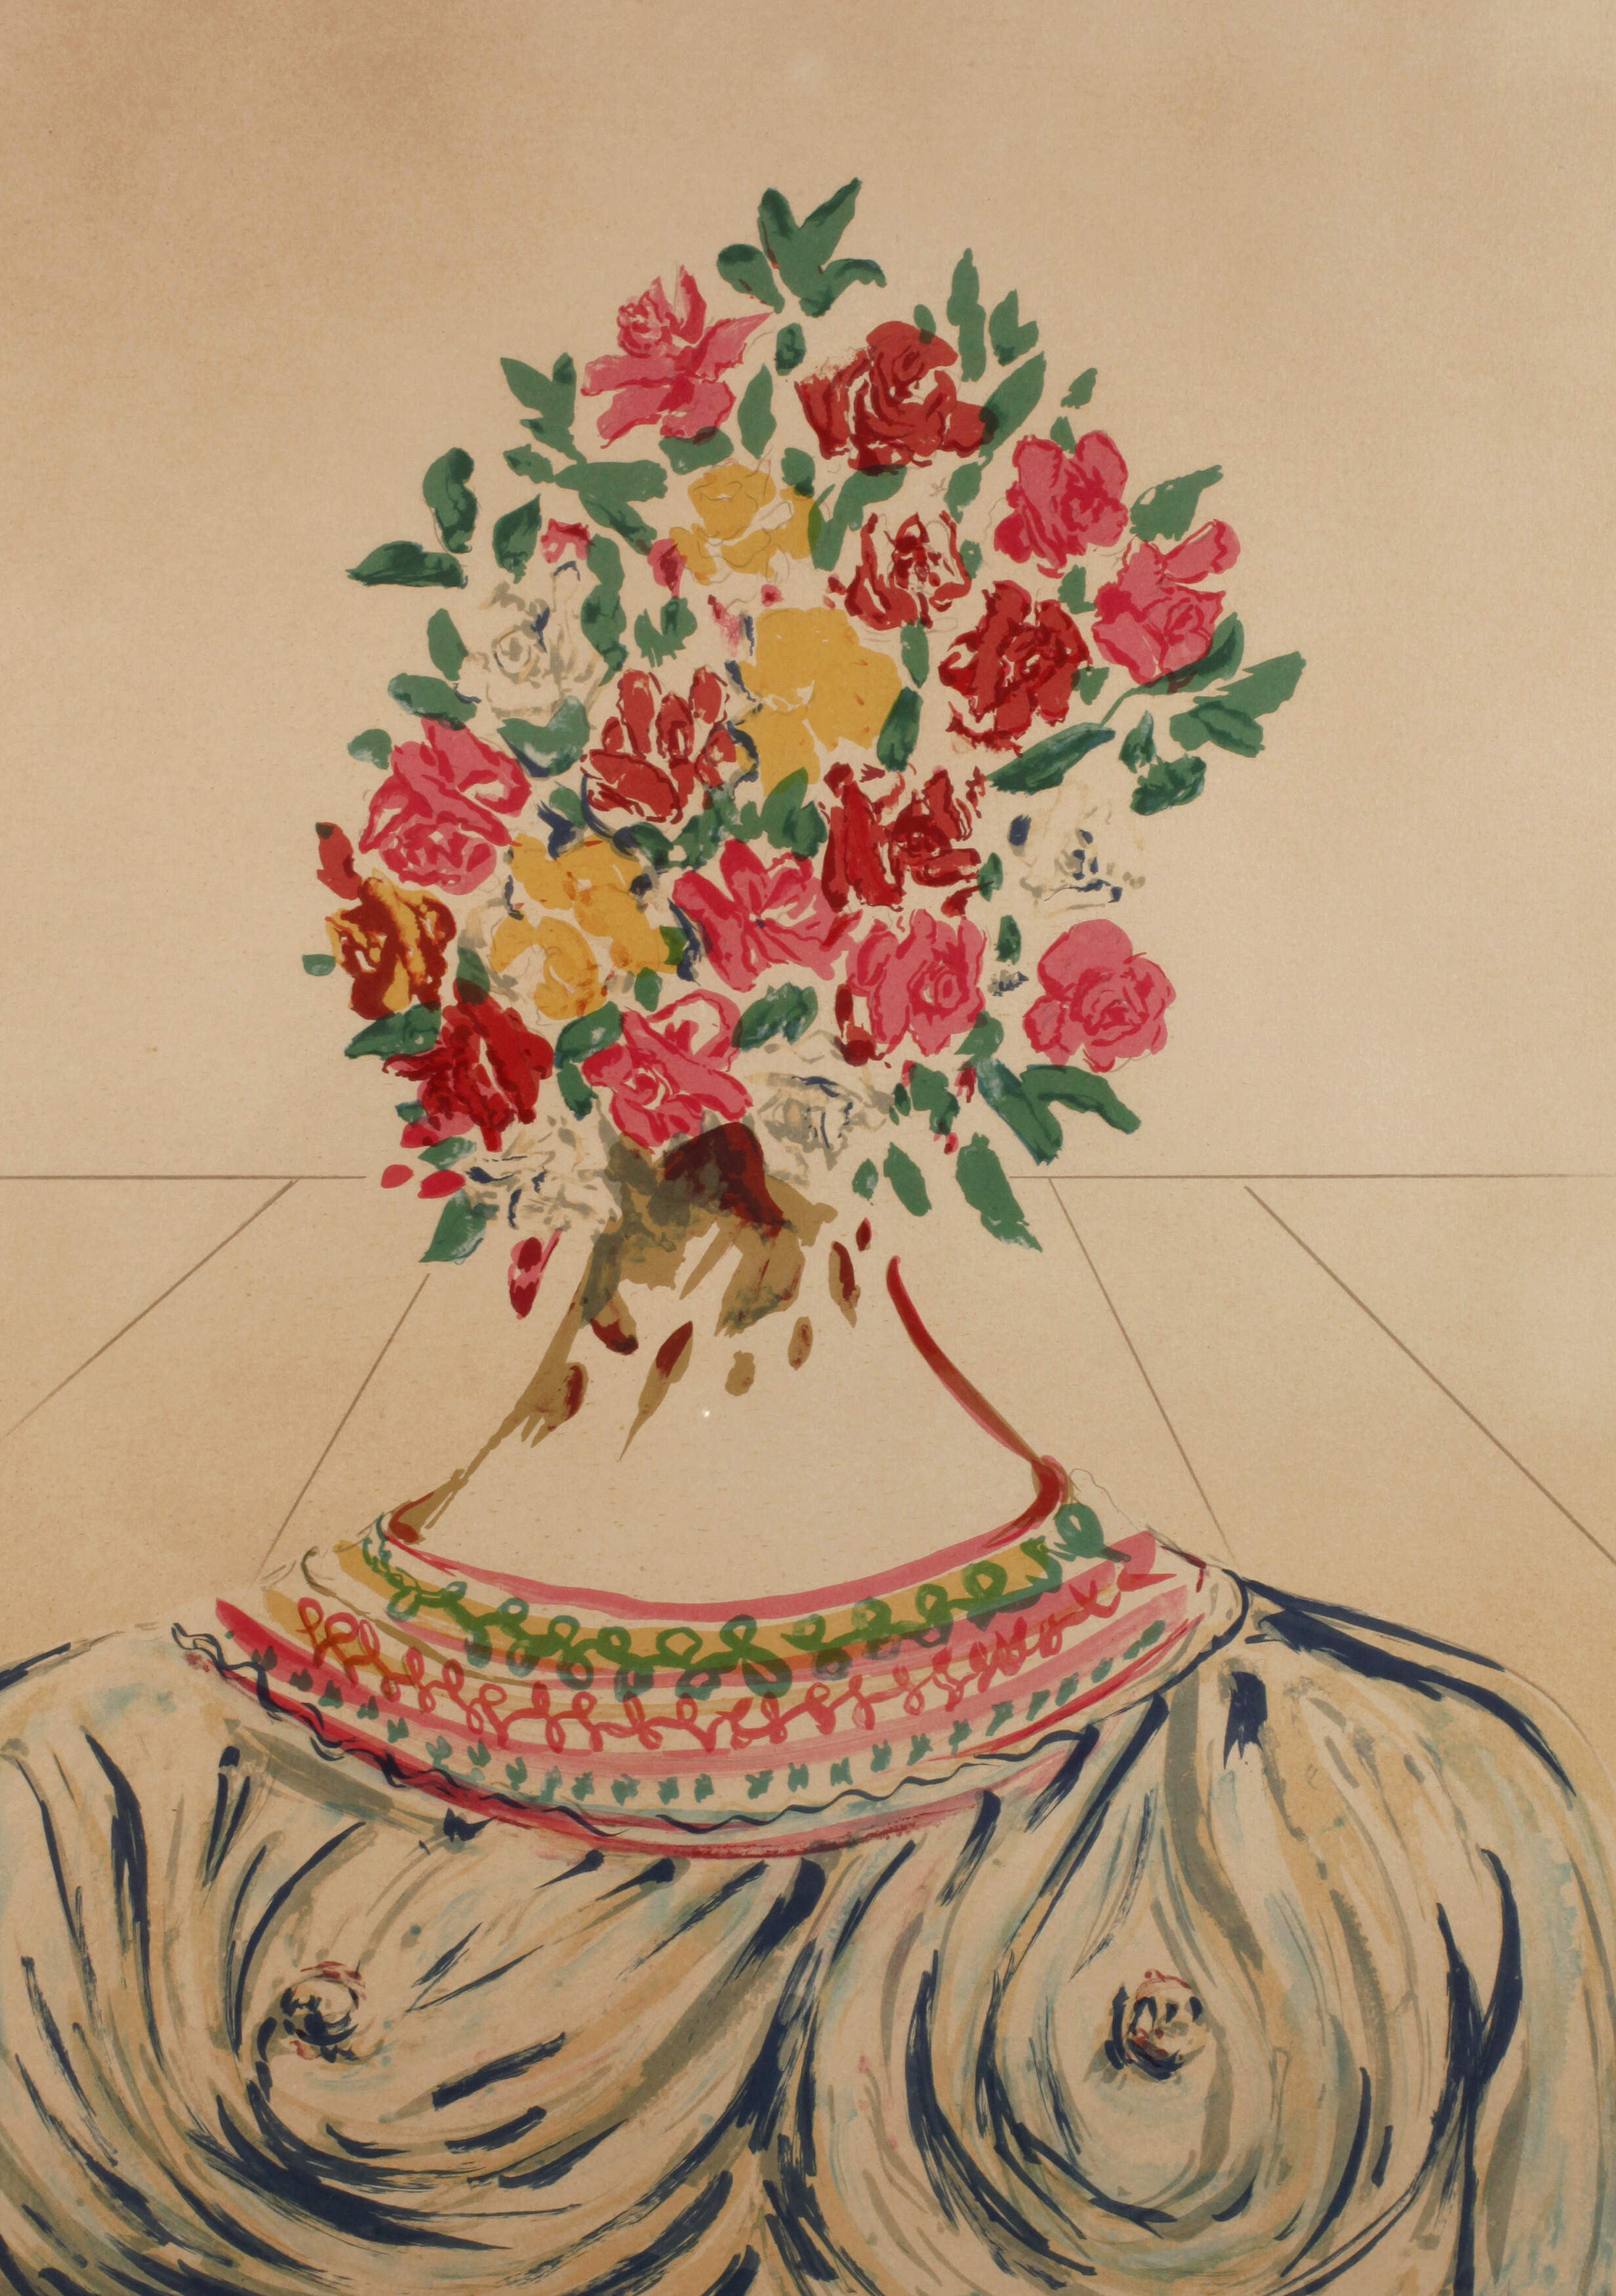 Salvador Dali, "Gala en fleurs"